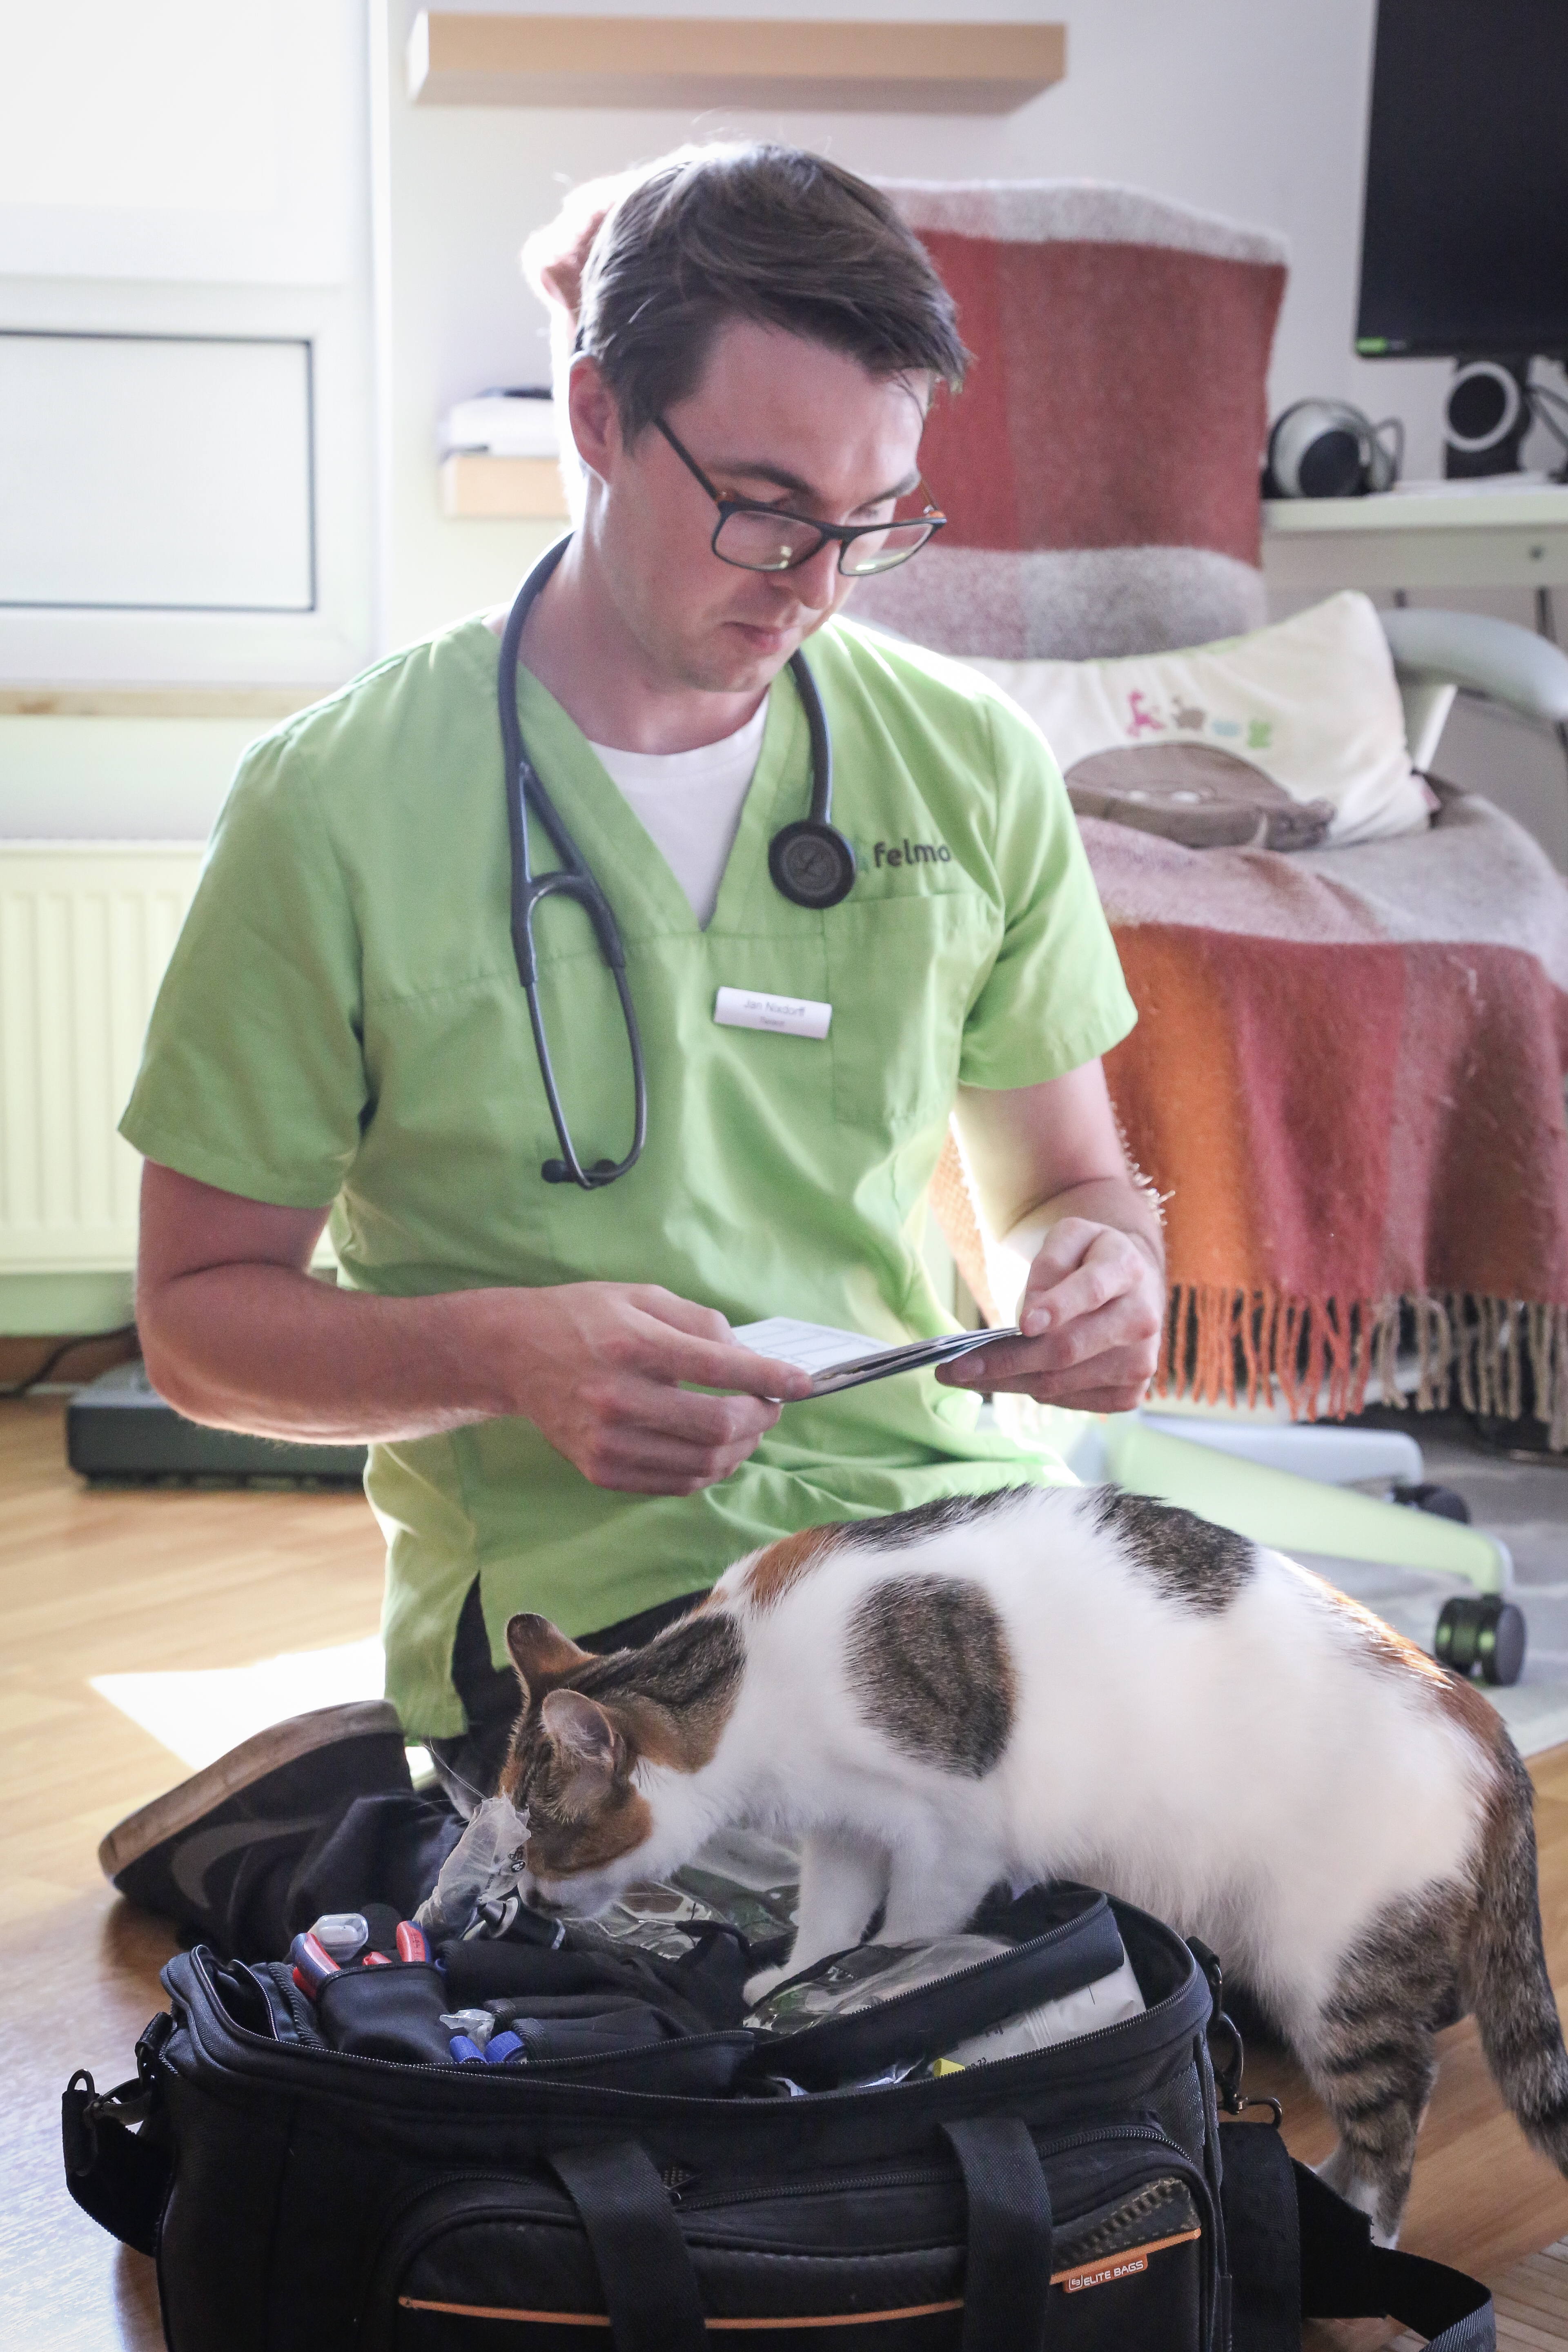 Mobiler-Tierarzt-Katze-Tierarztvergleich_Bild-SandraAllekotte